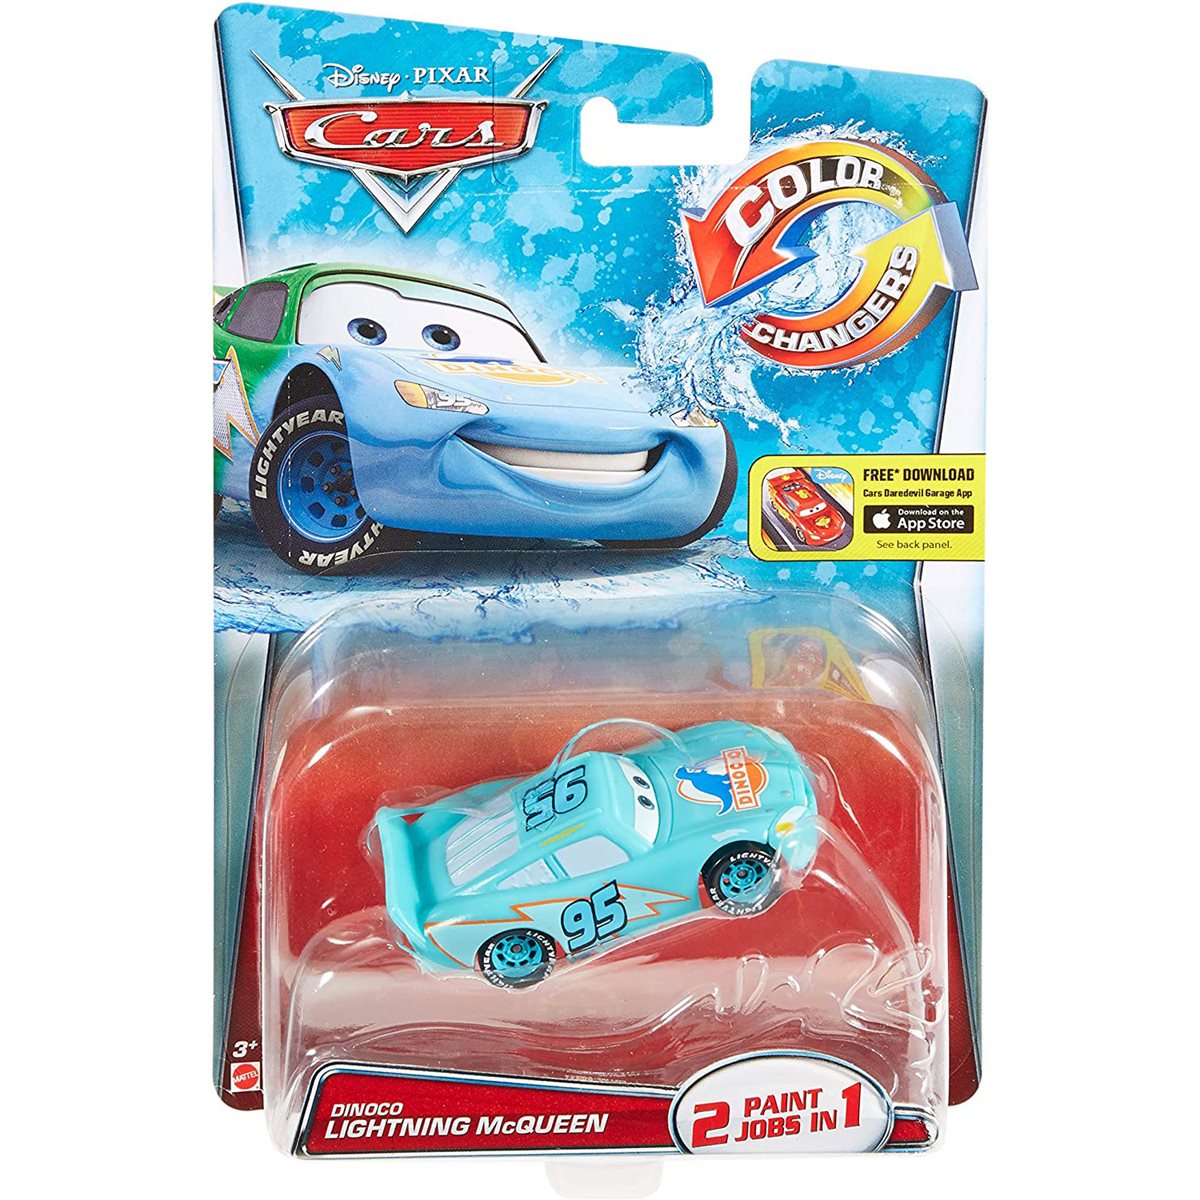 Color Changing Cars Disney Disney Pixar Cars Color Changers Dinoco